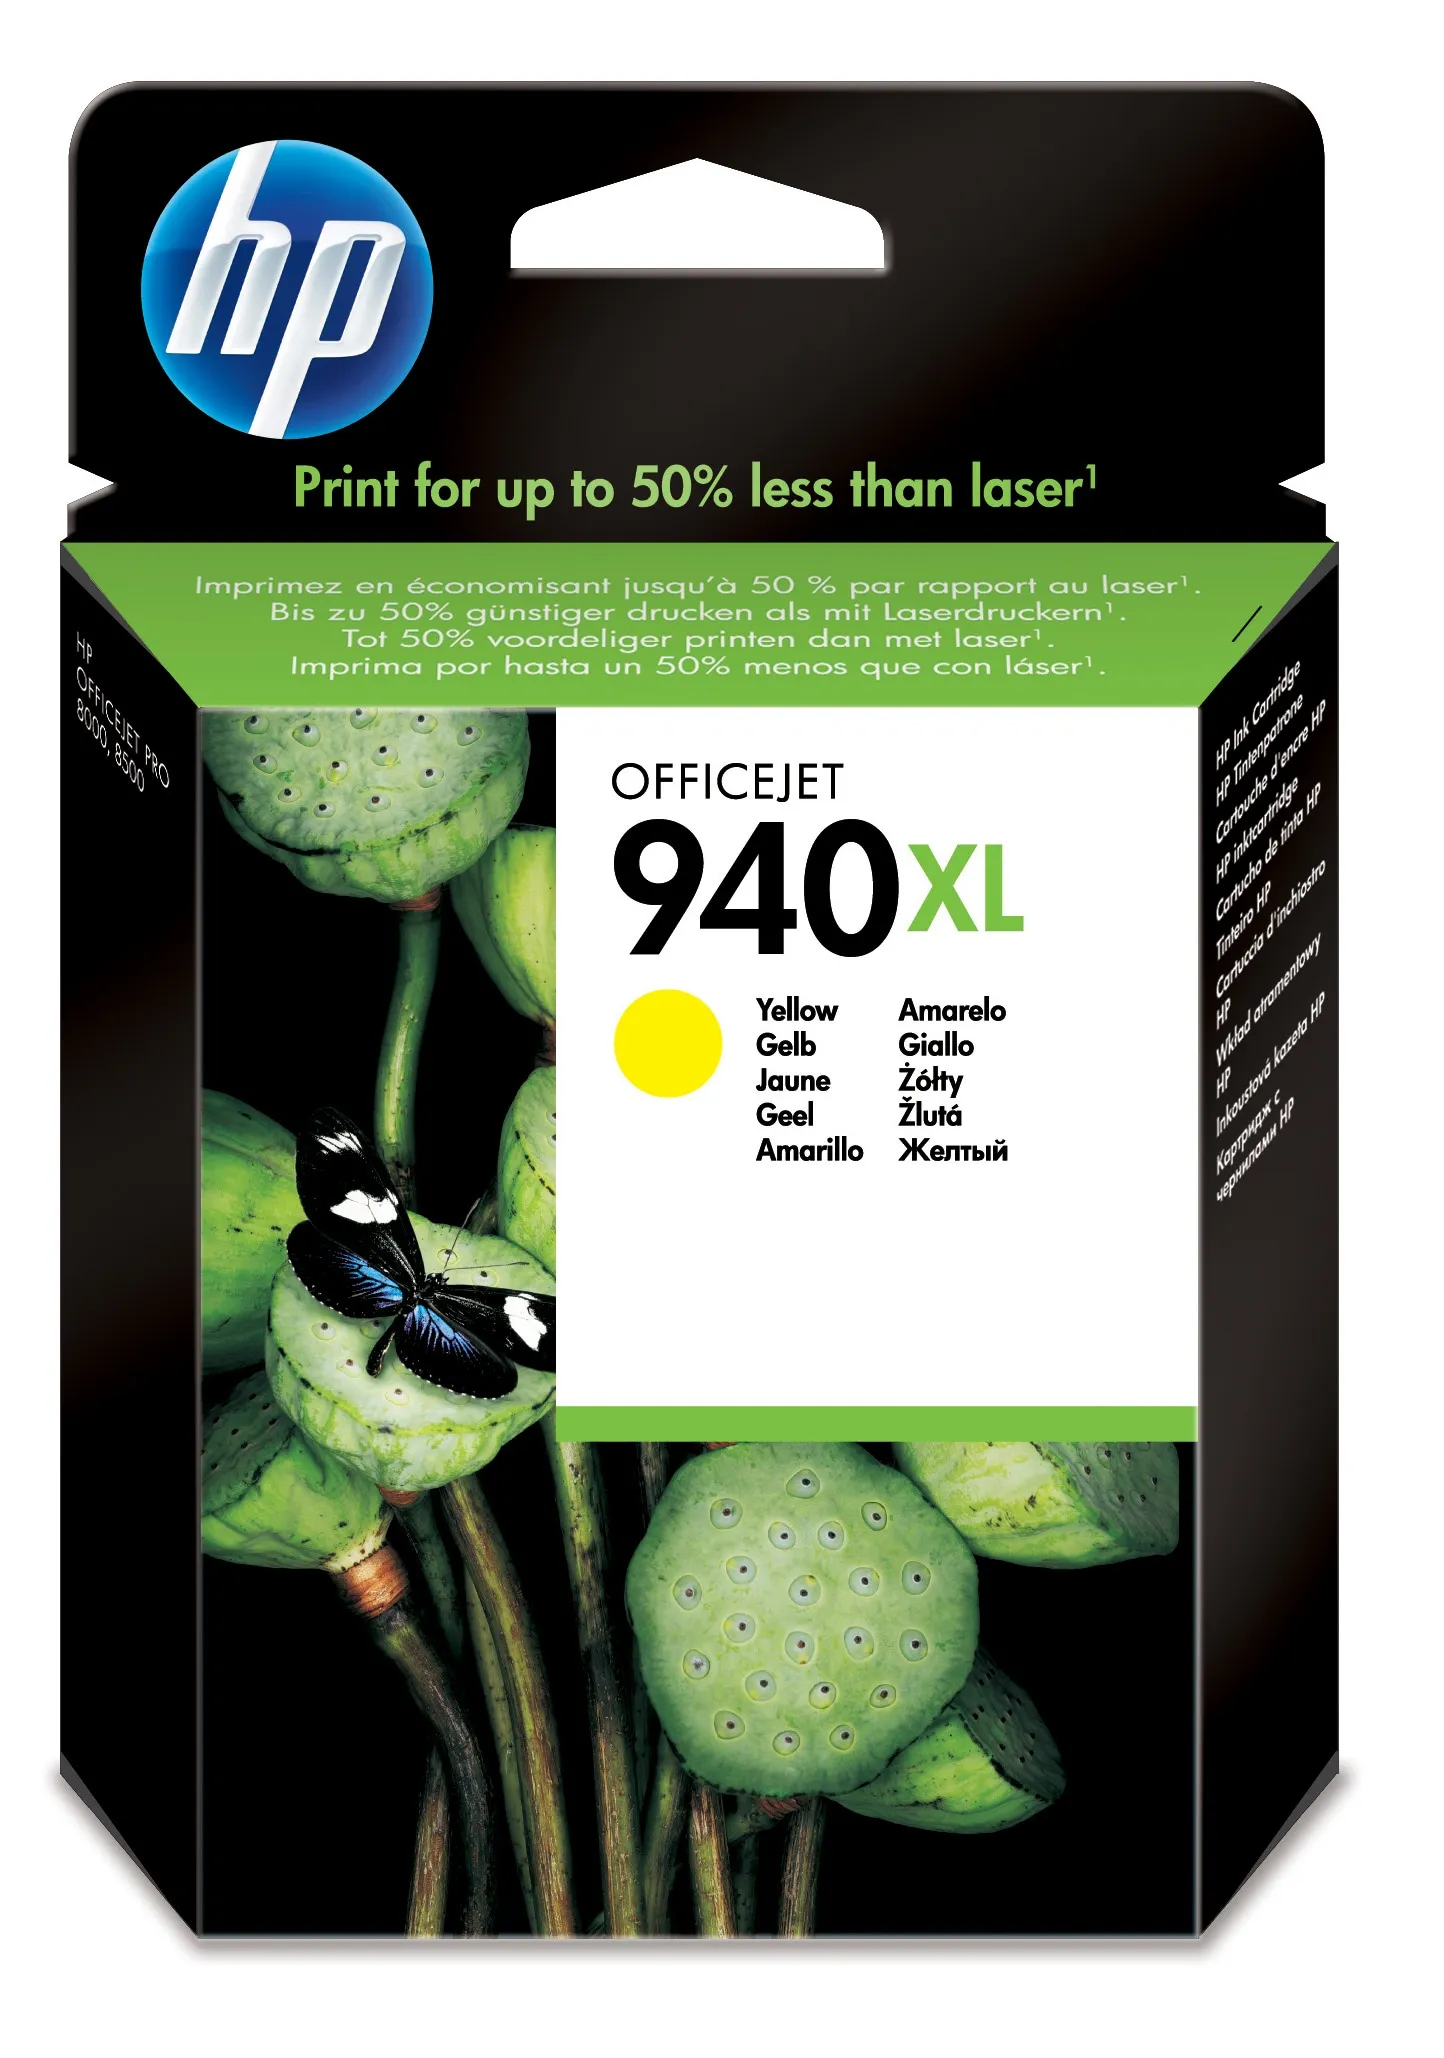 Achat HP 940XL High Yield Yellow Original Ink Cartridge au meilleur prix